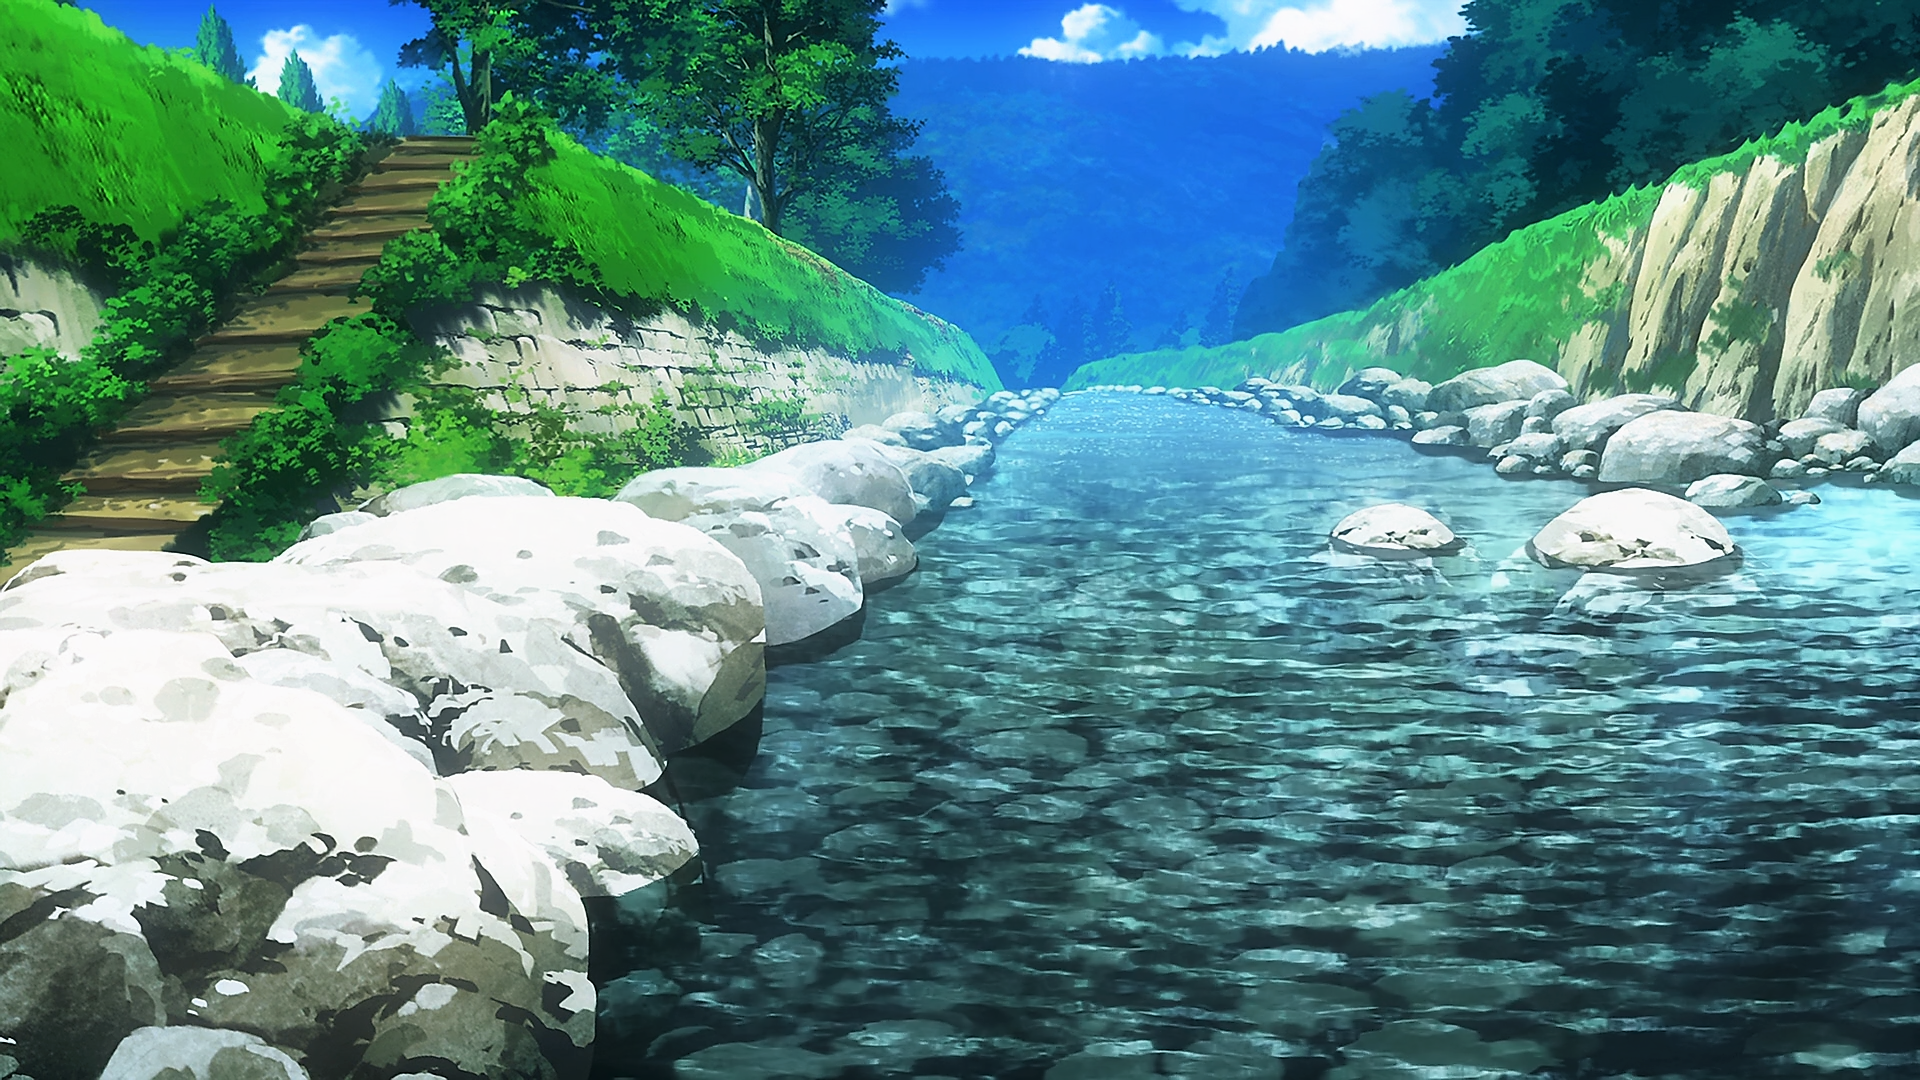 Anime River in the Forest Illustration | Landscape art, Fantasy art  landscapes, Environment concept art